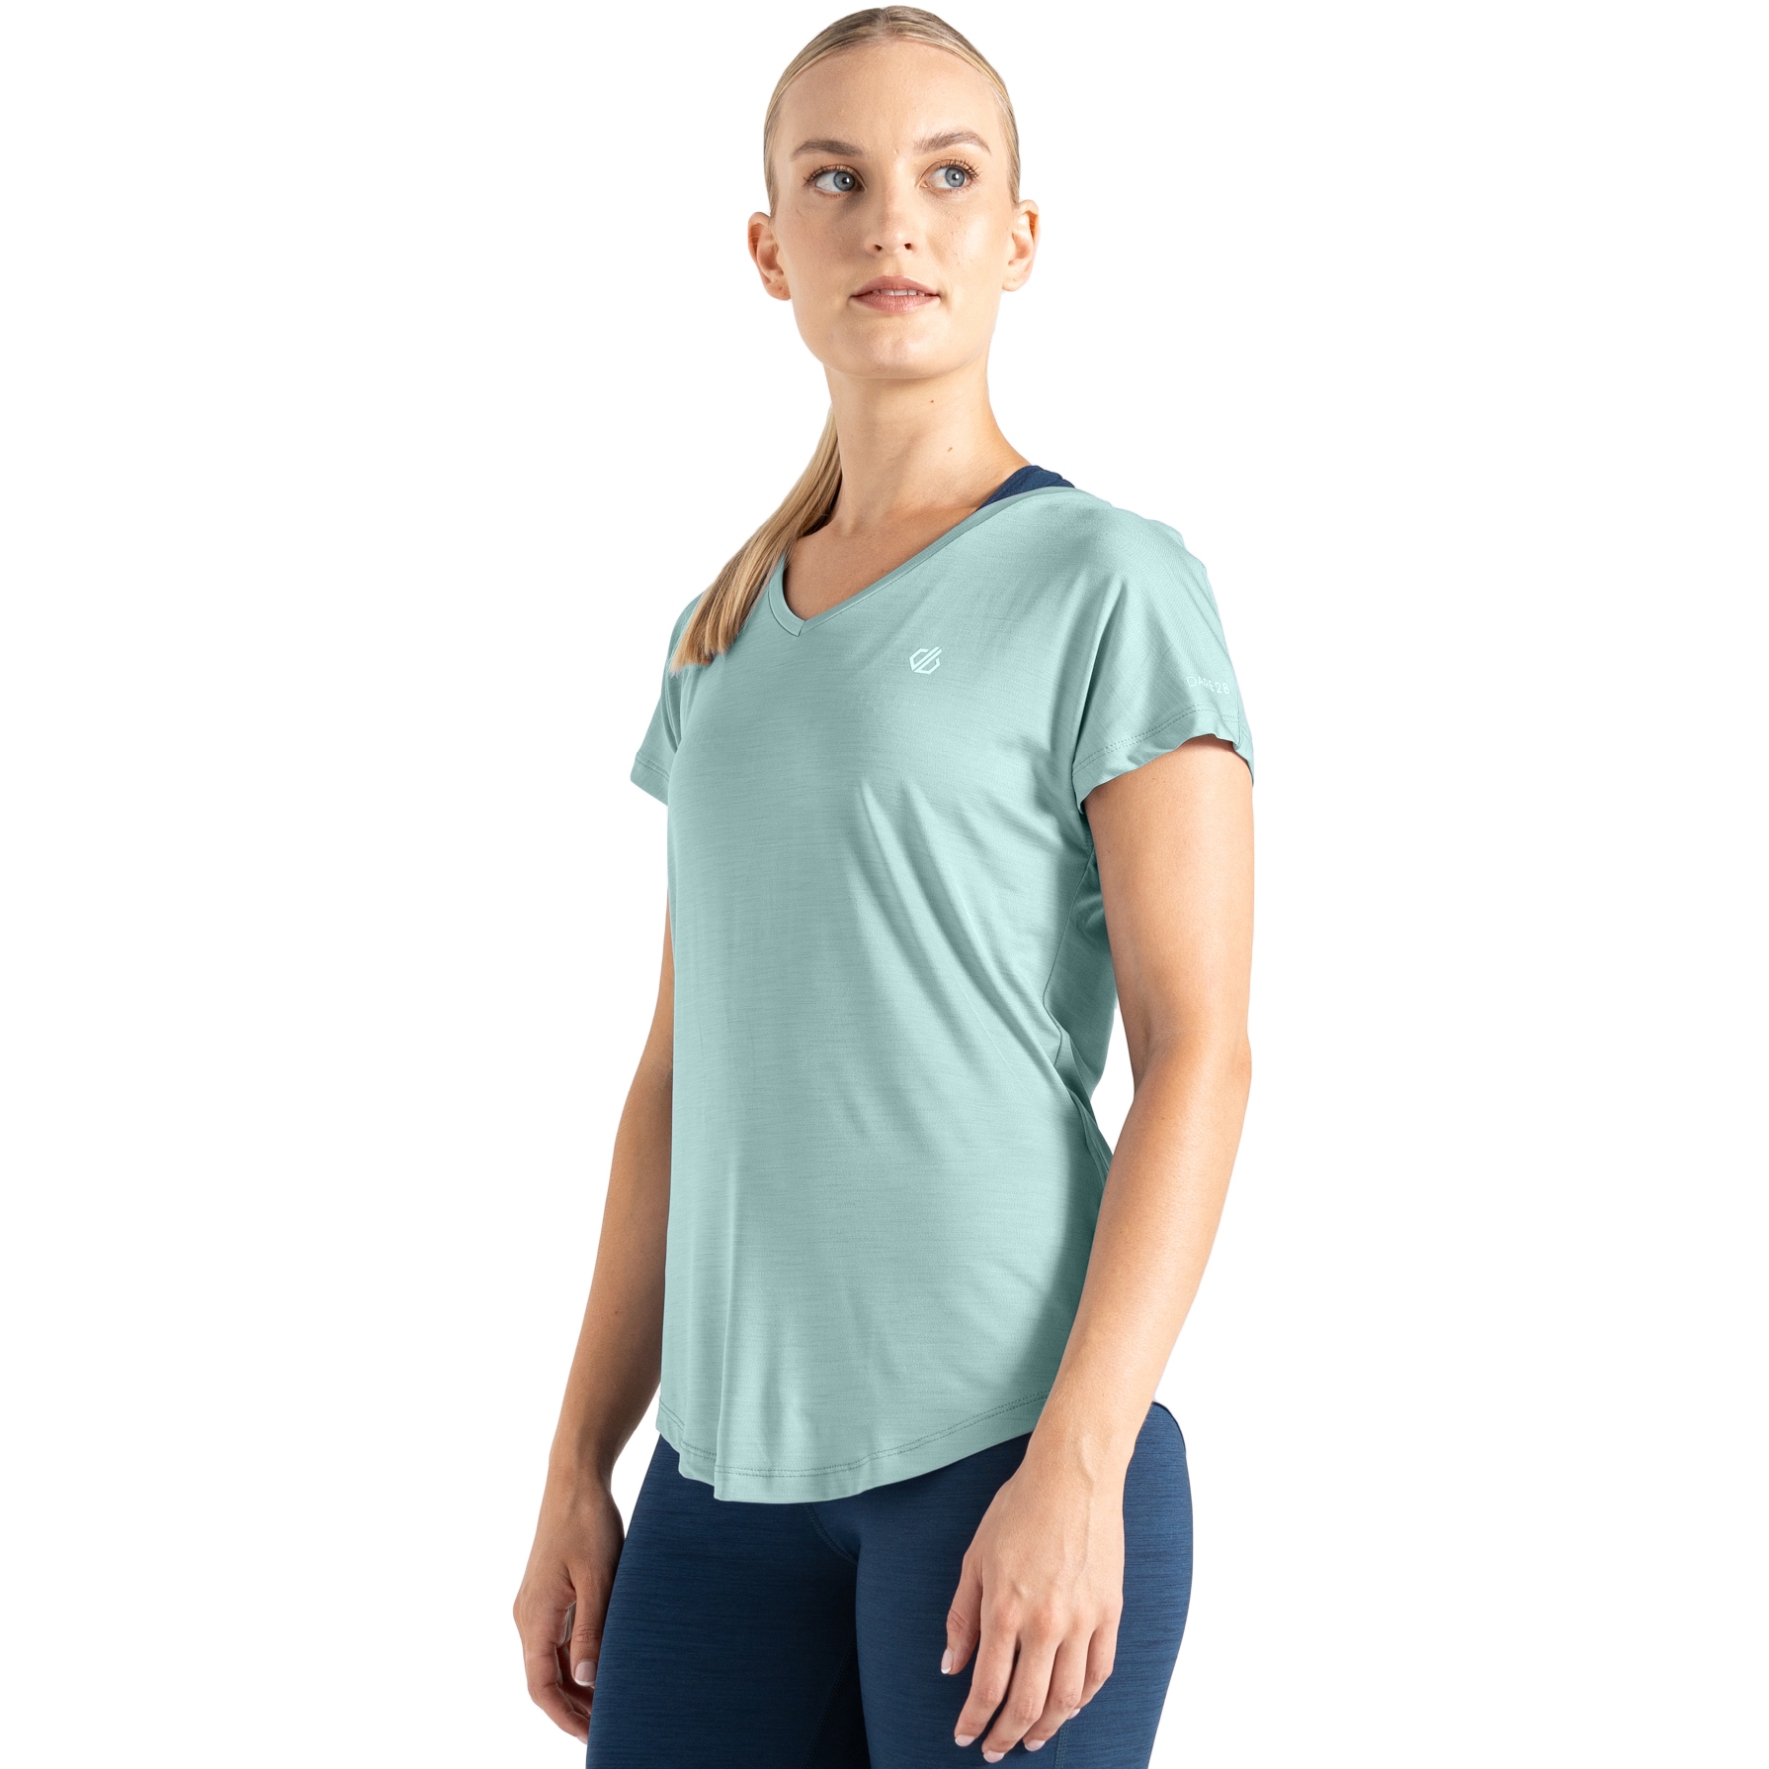 Produktbild von Dare 2b Vigilant T-Shirt Damen - 7M7 Mint Green